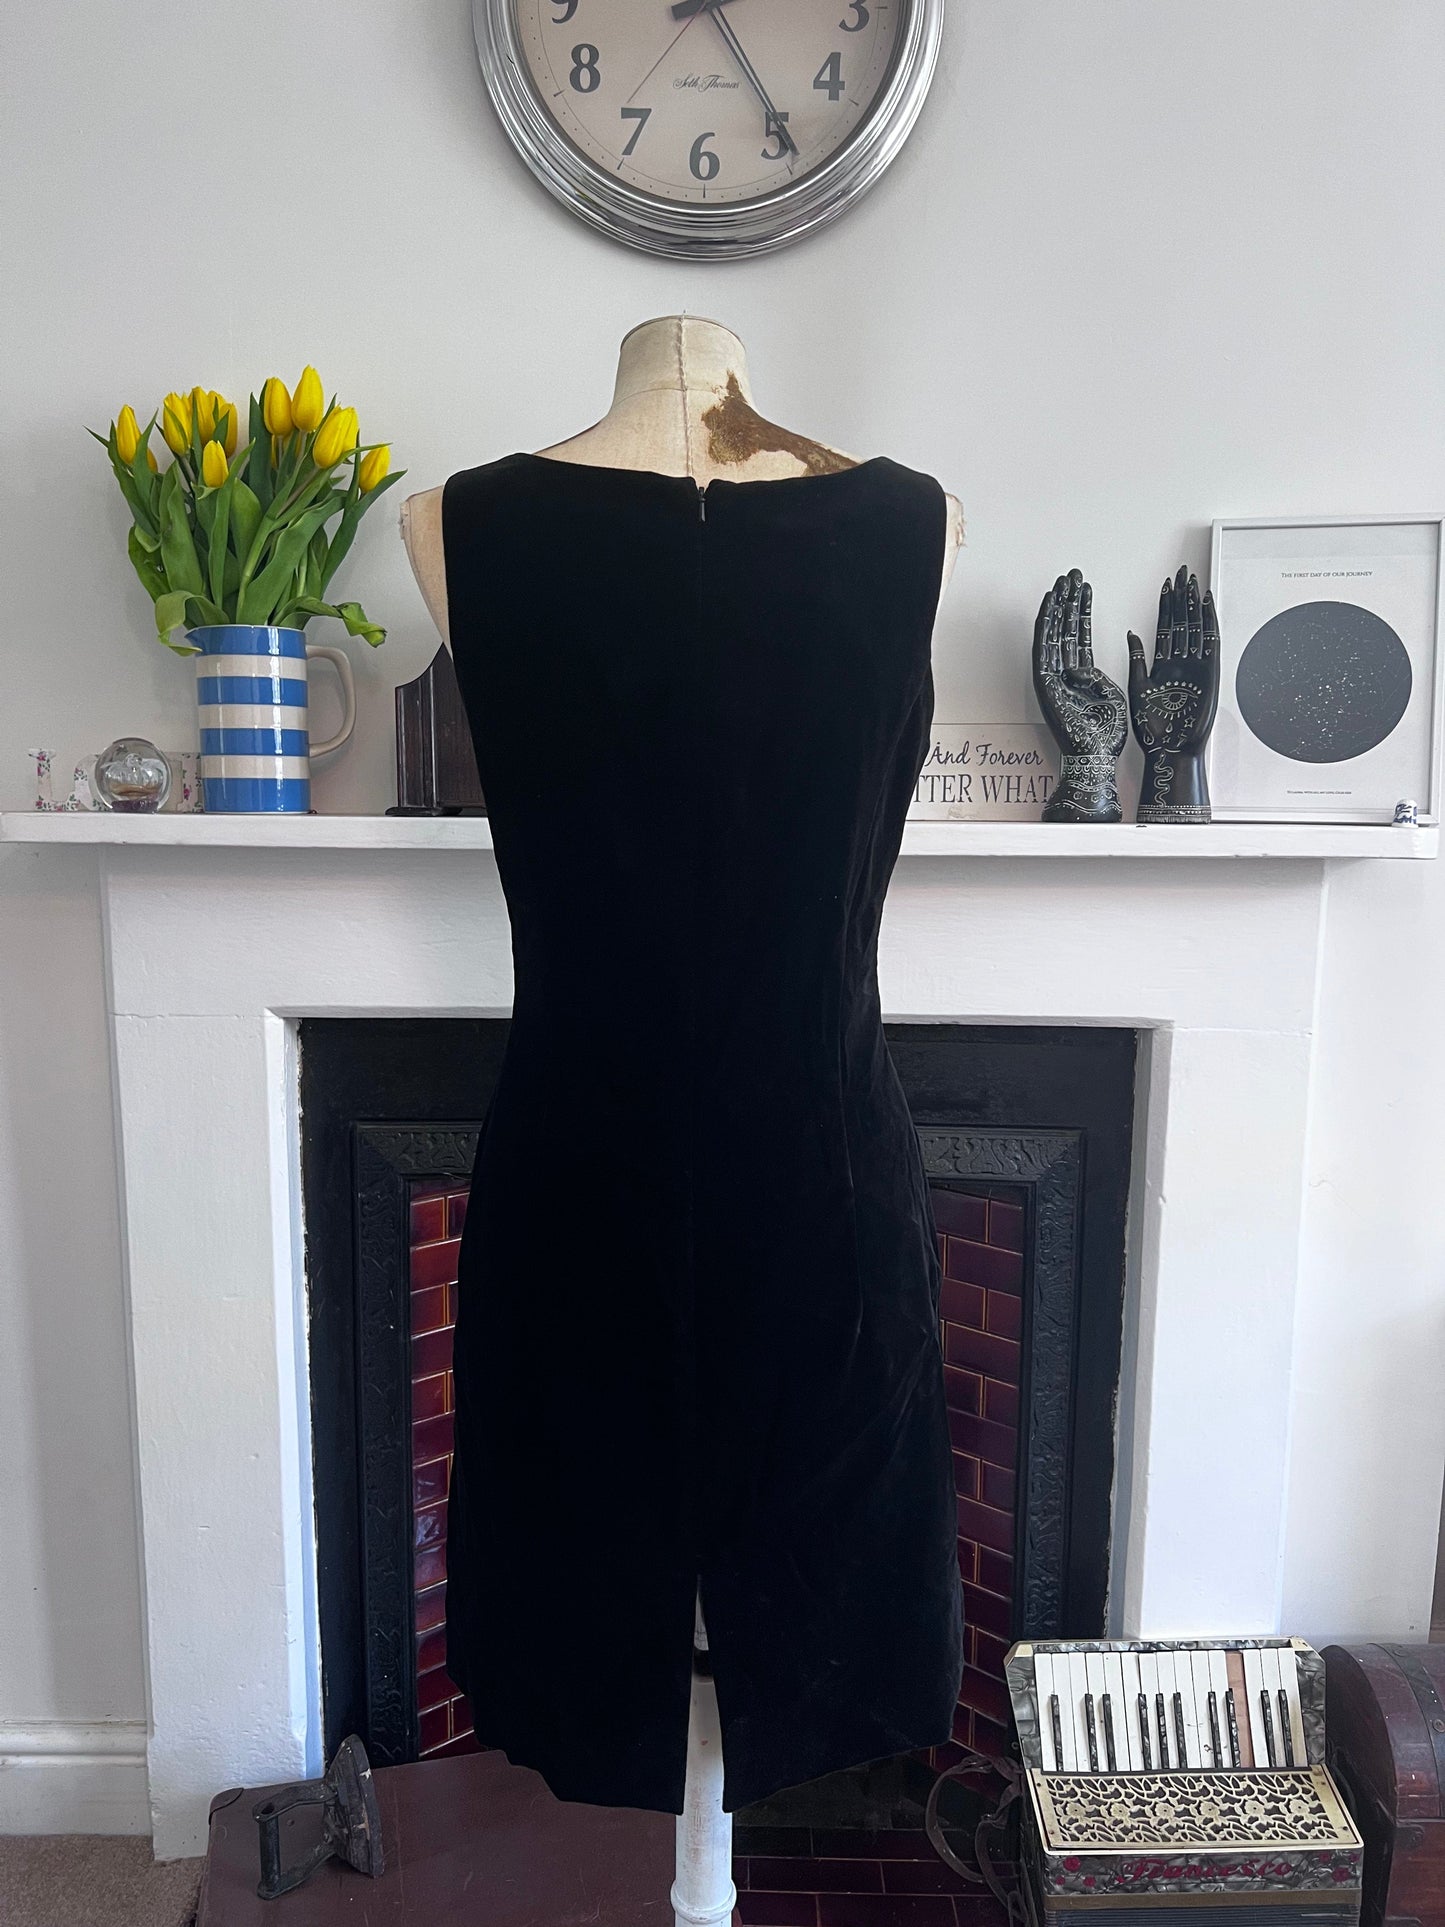 Vintage Laura Ashley Dress - Black Velvet Mini Dress - Beaded Detail  immaculate as new dress - Size 10 - Laura ashley Dress